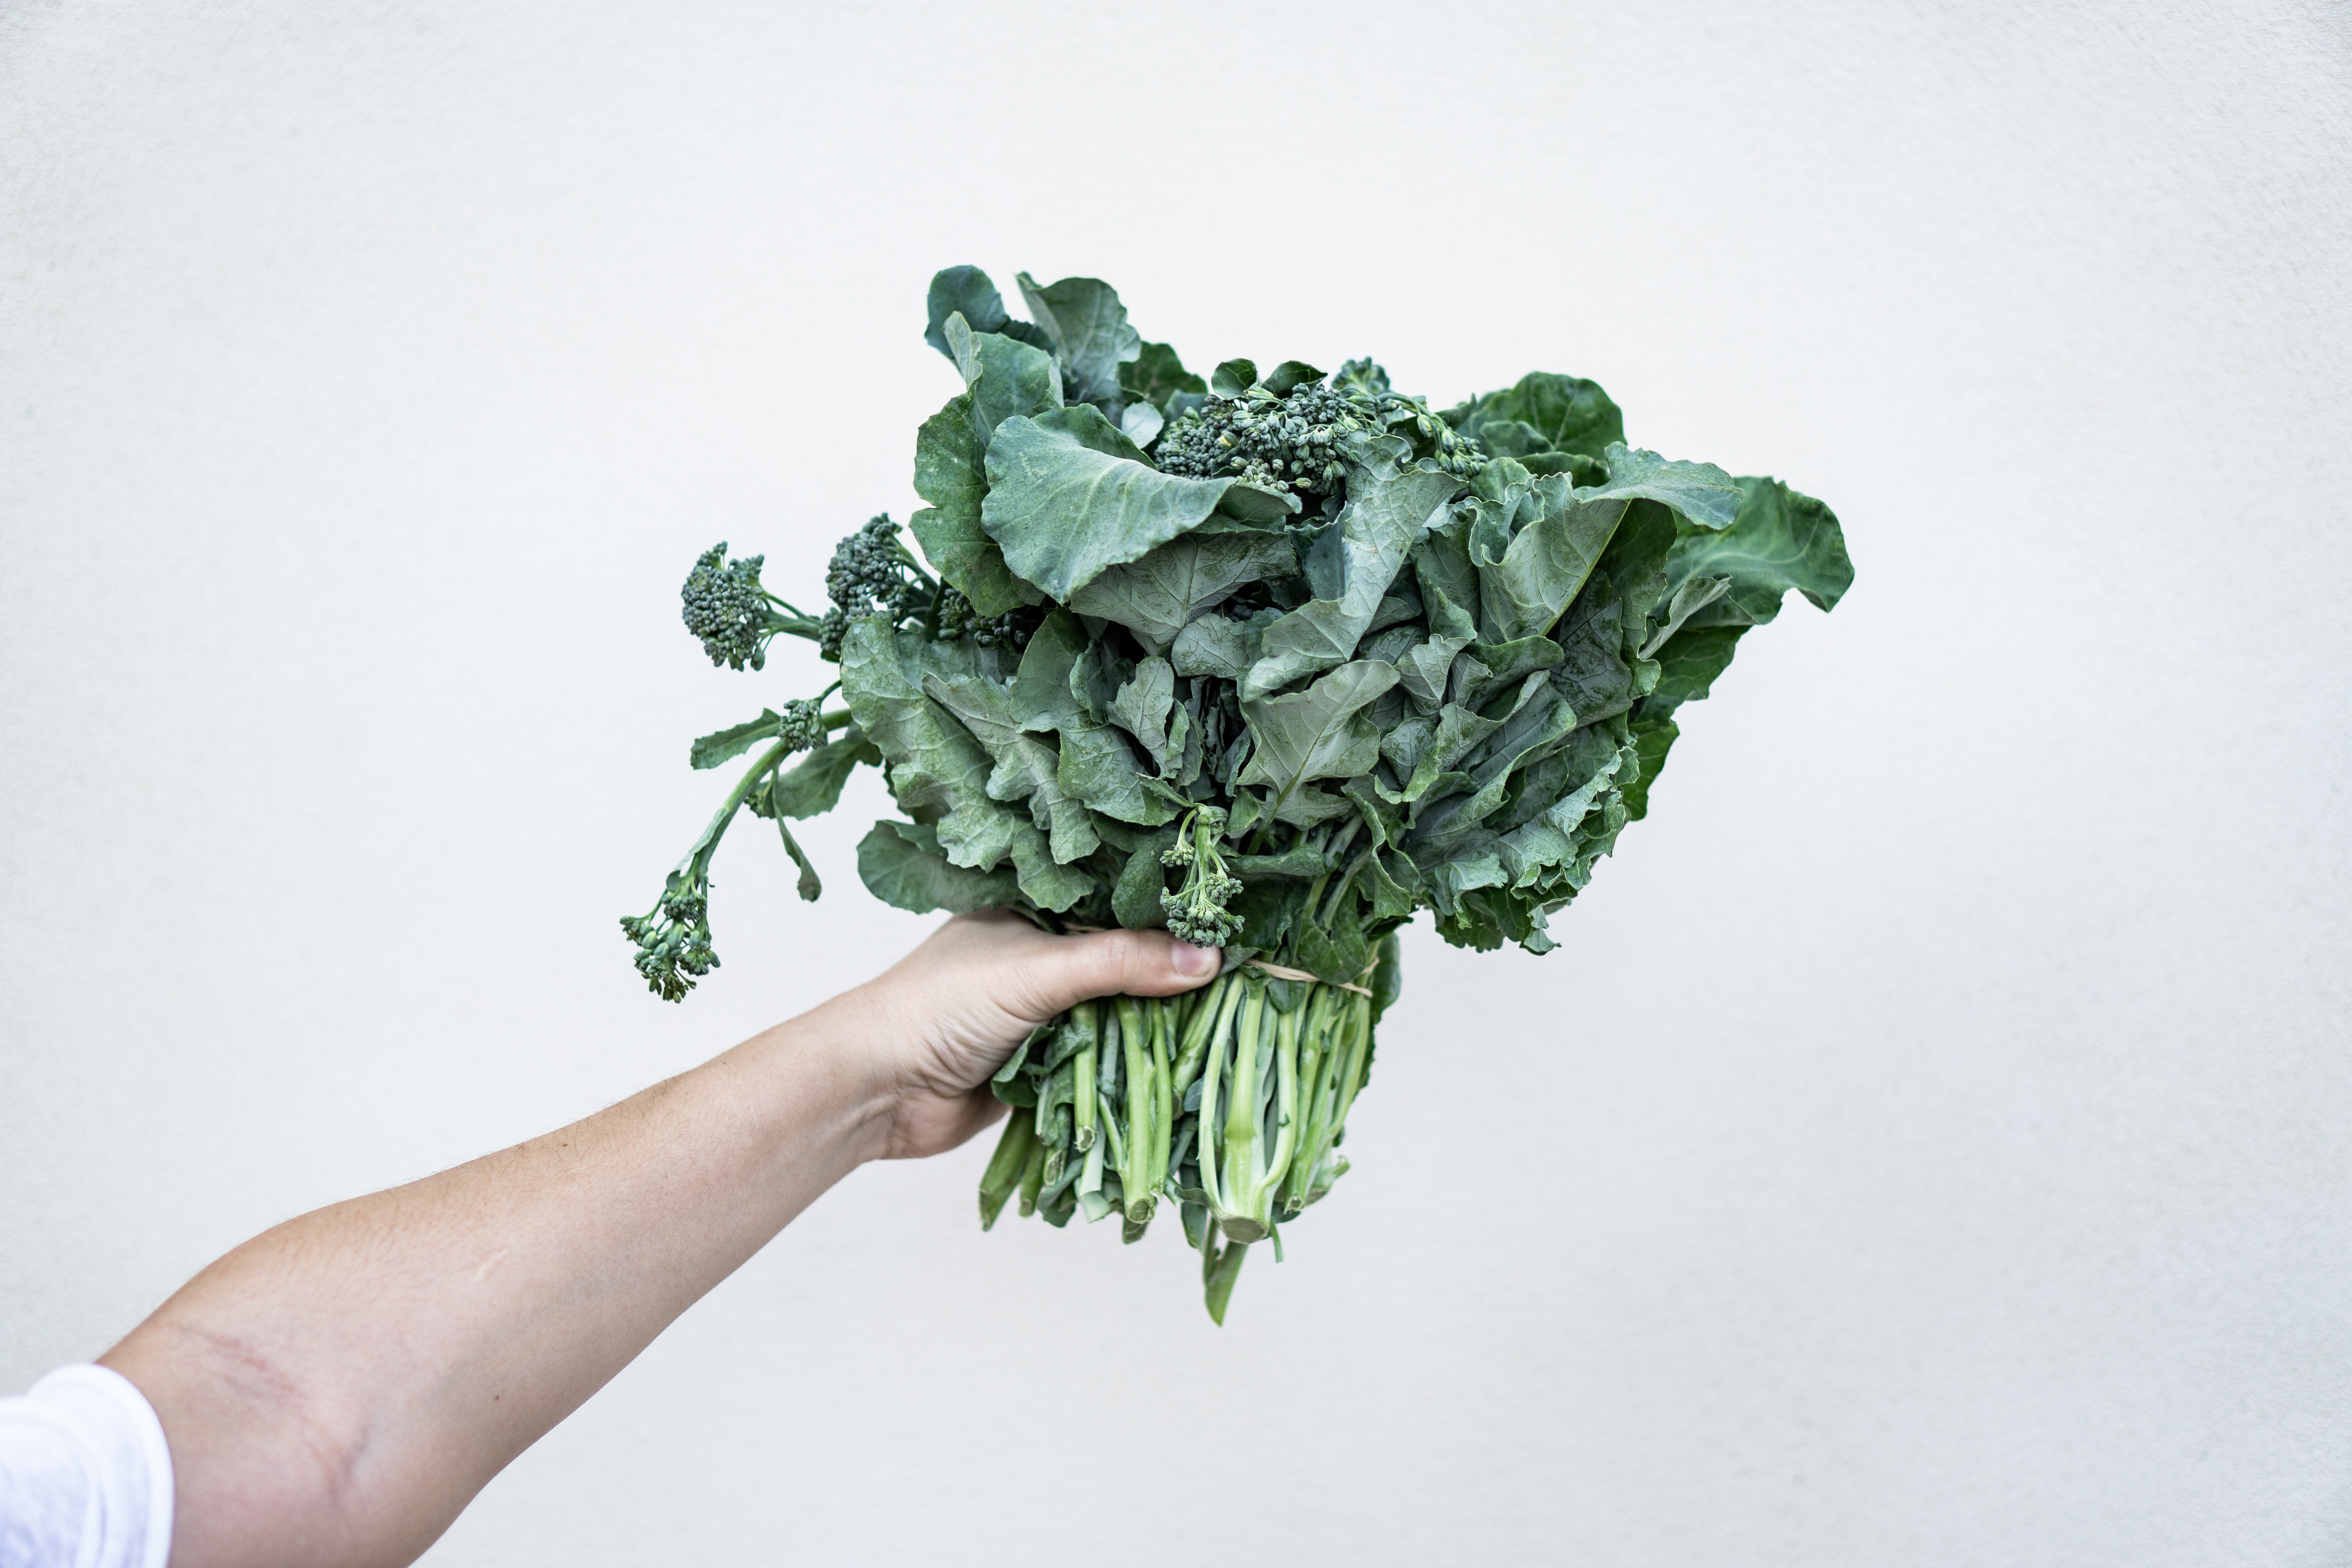 bundle of kale held in someone's hand